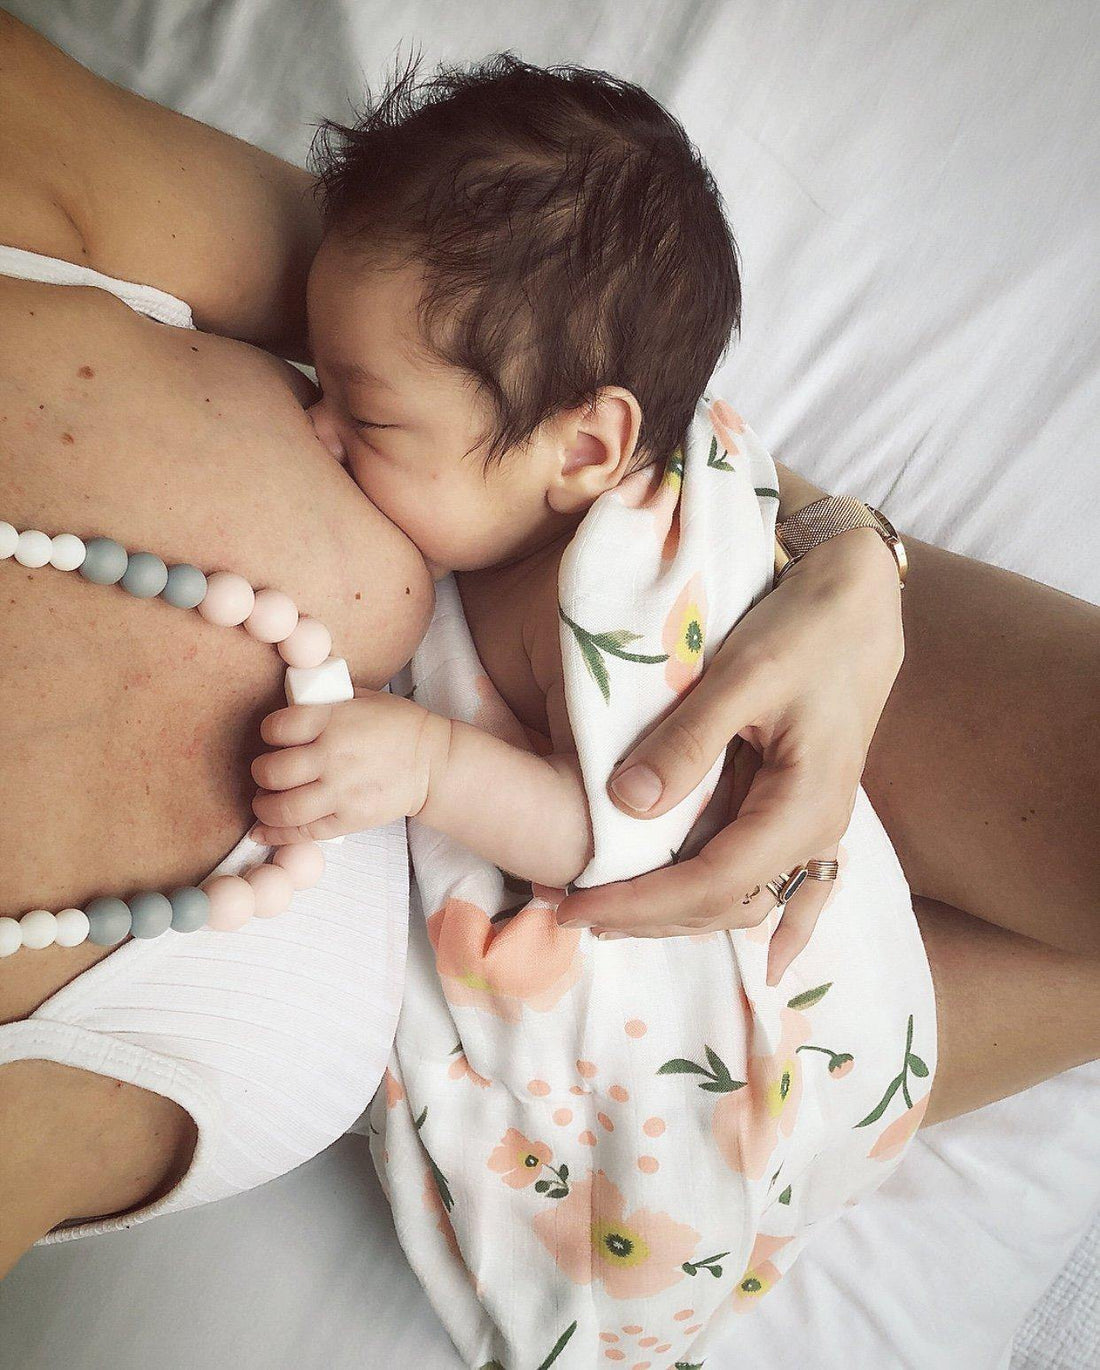 Produits Eveil & Jouet, Jouet Maroc - Baby And Mom